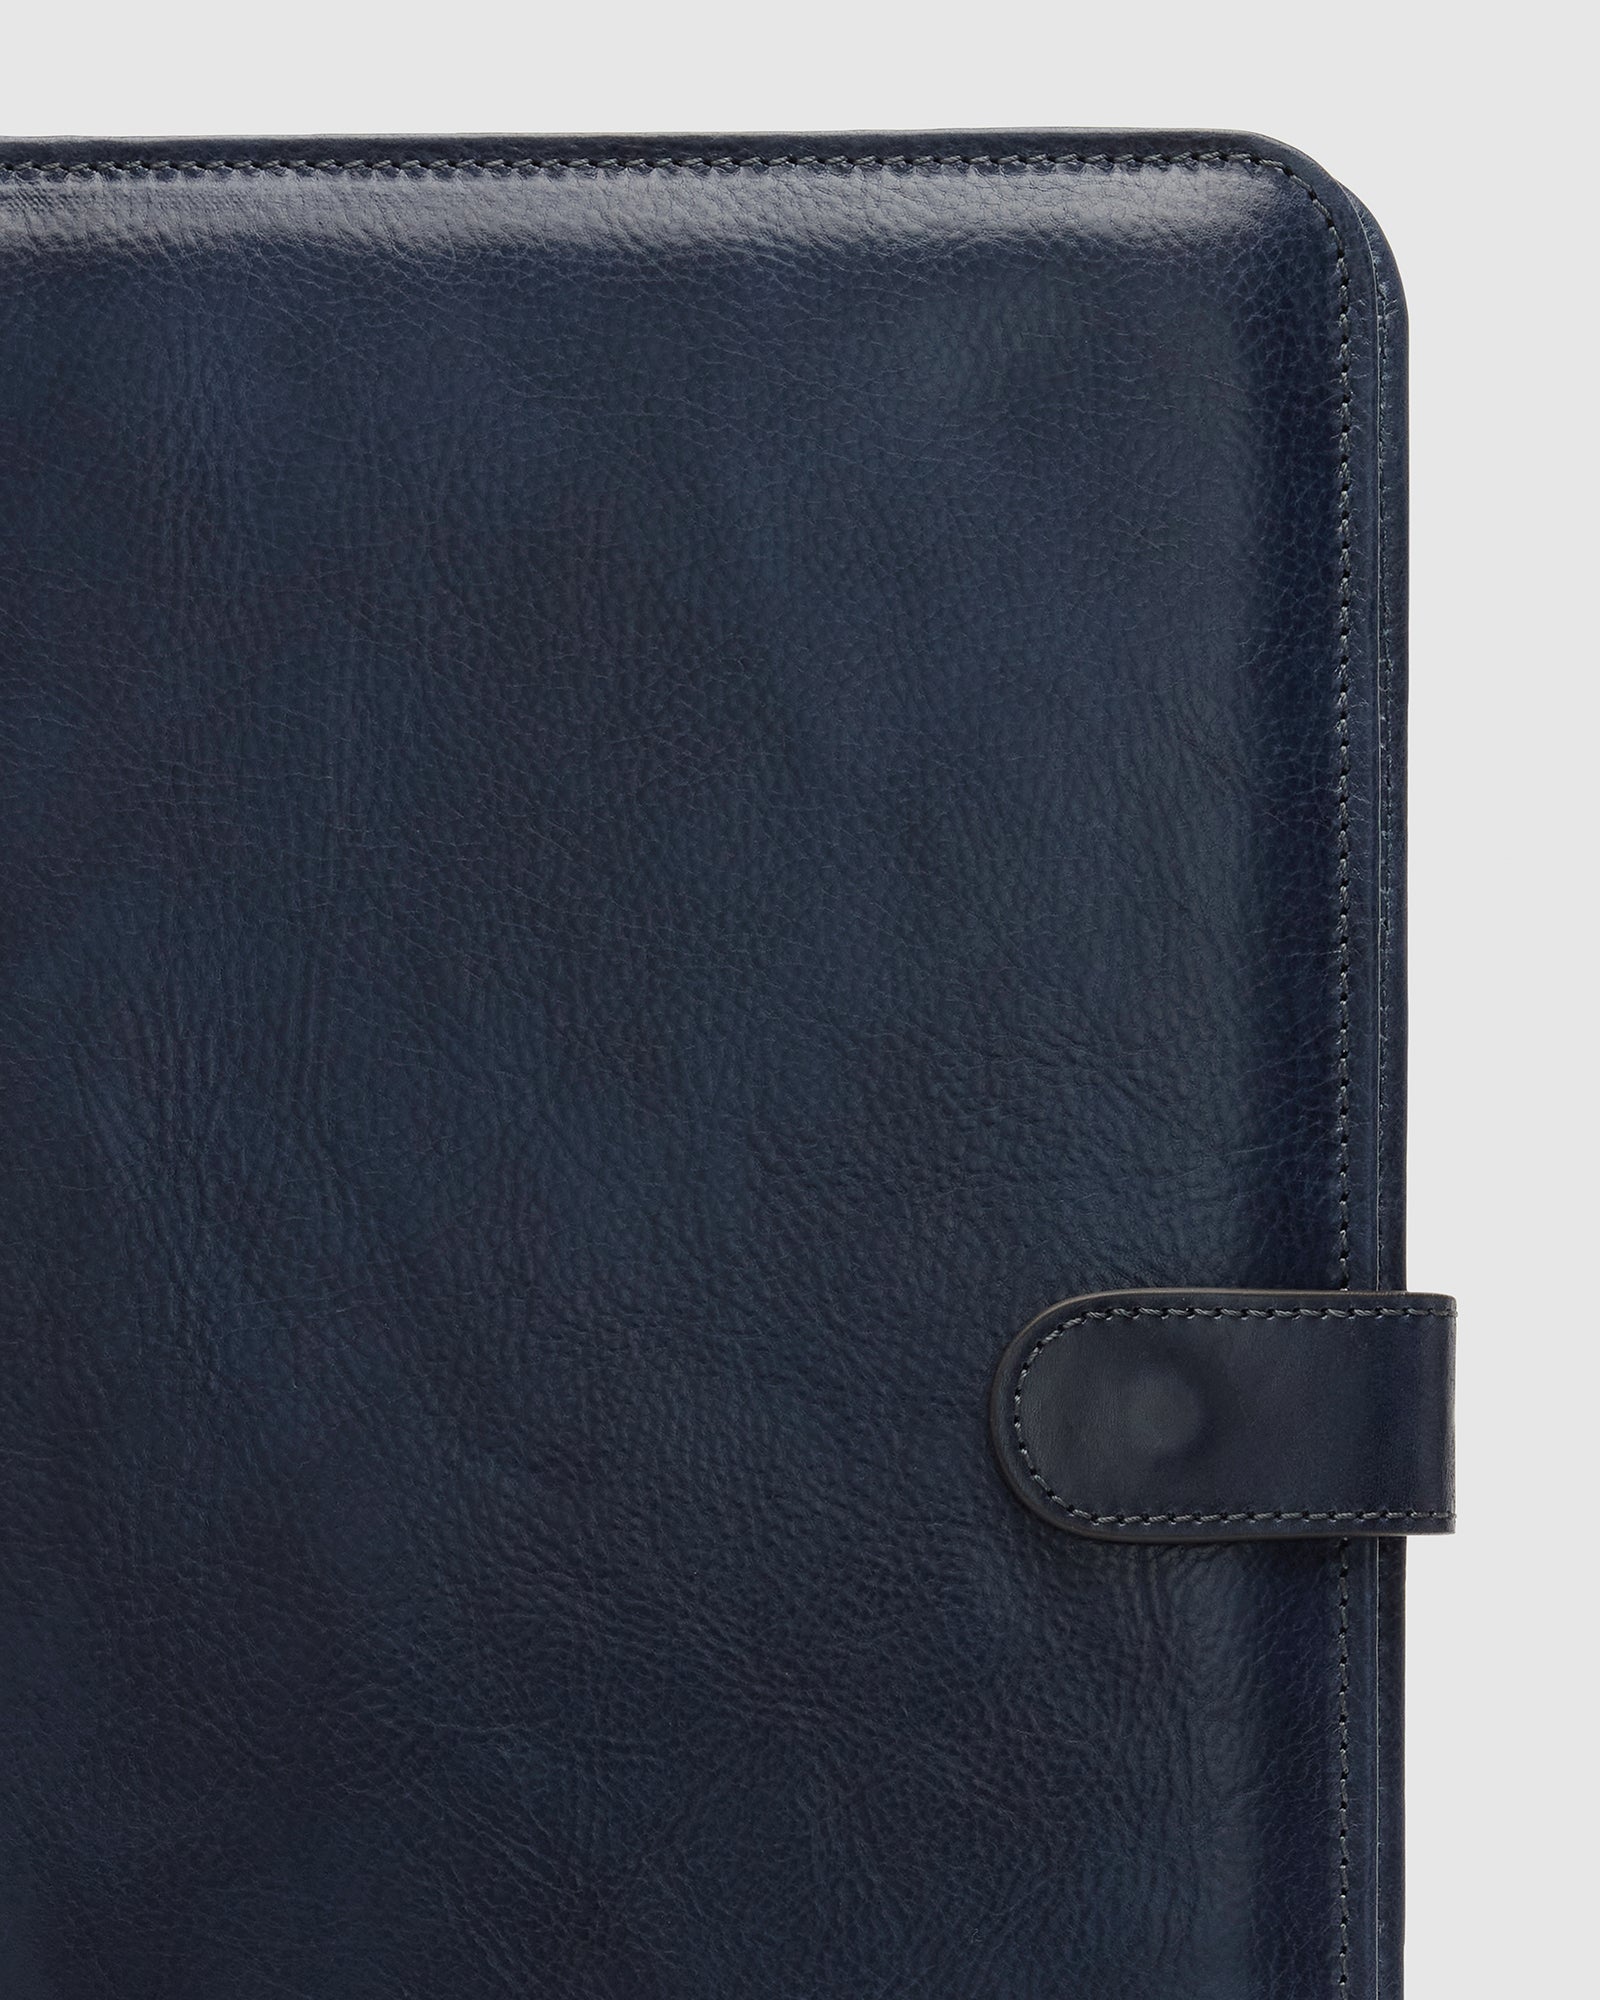 Imperial Blue - Clip On Leather Compendium